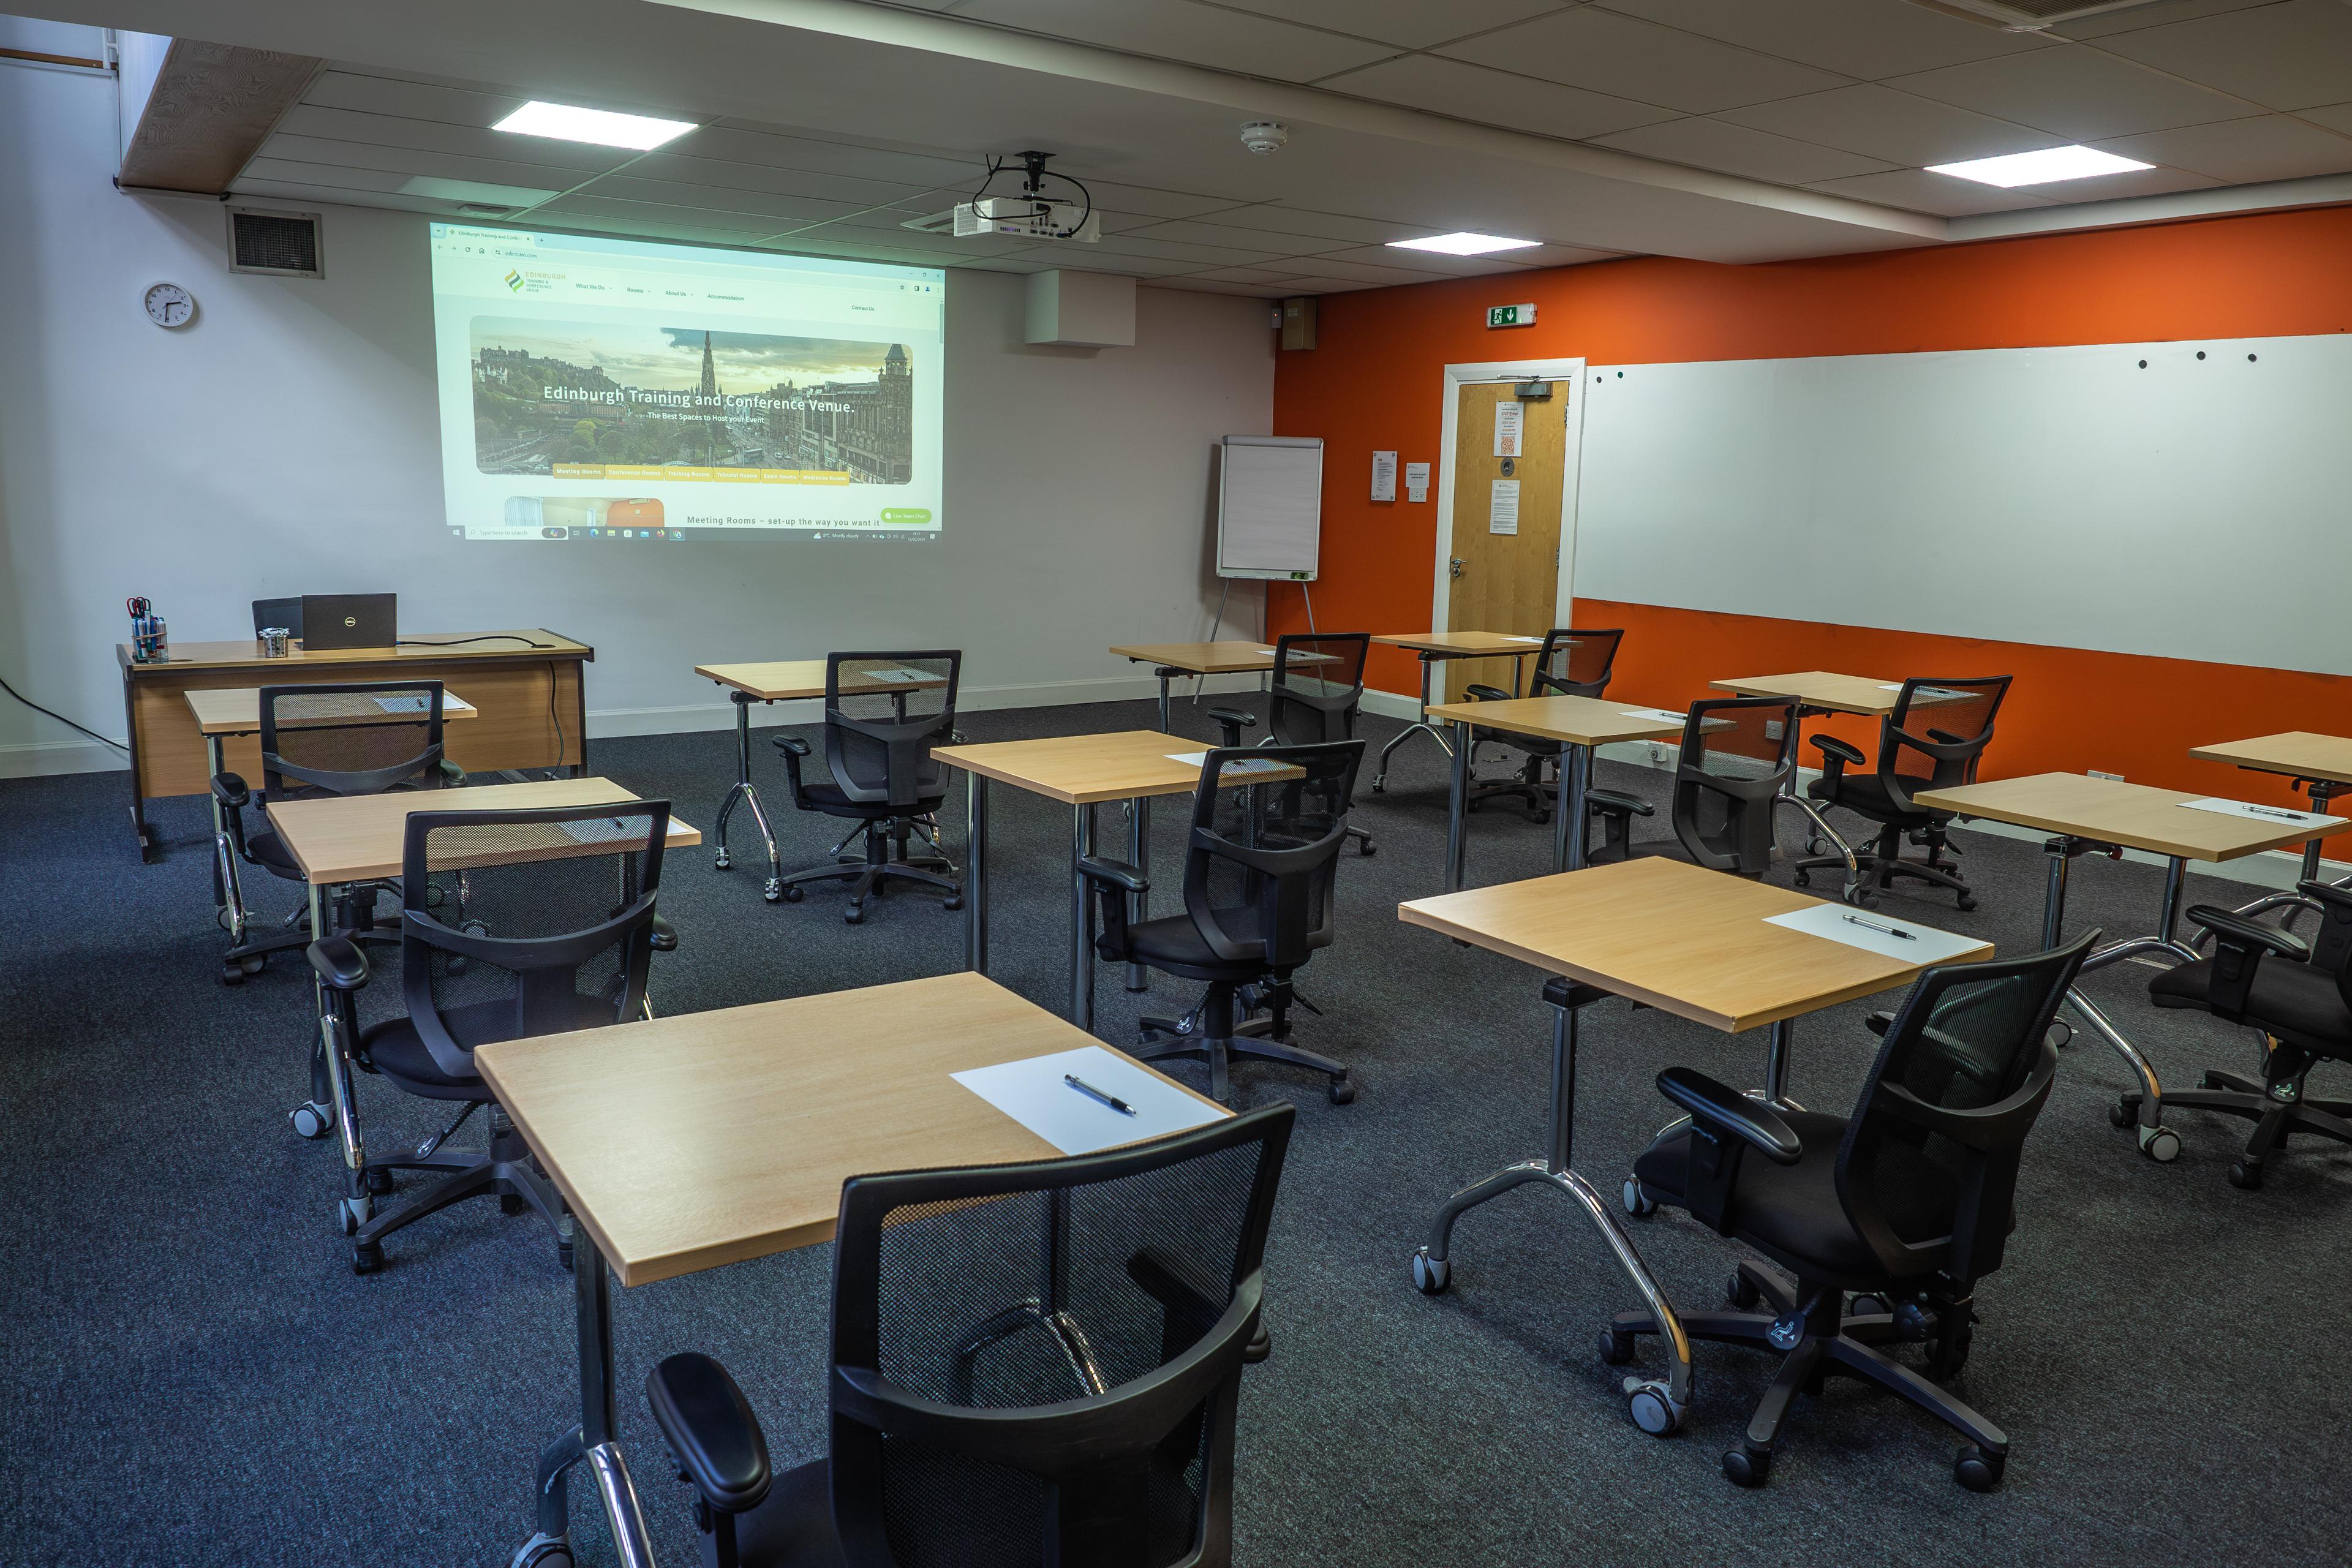 Edinburgh Training And Conference Venue, Exam Rooms photo #1